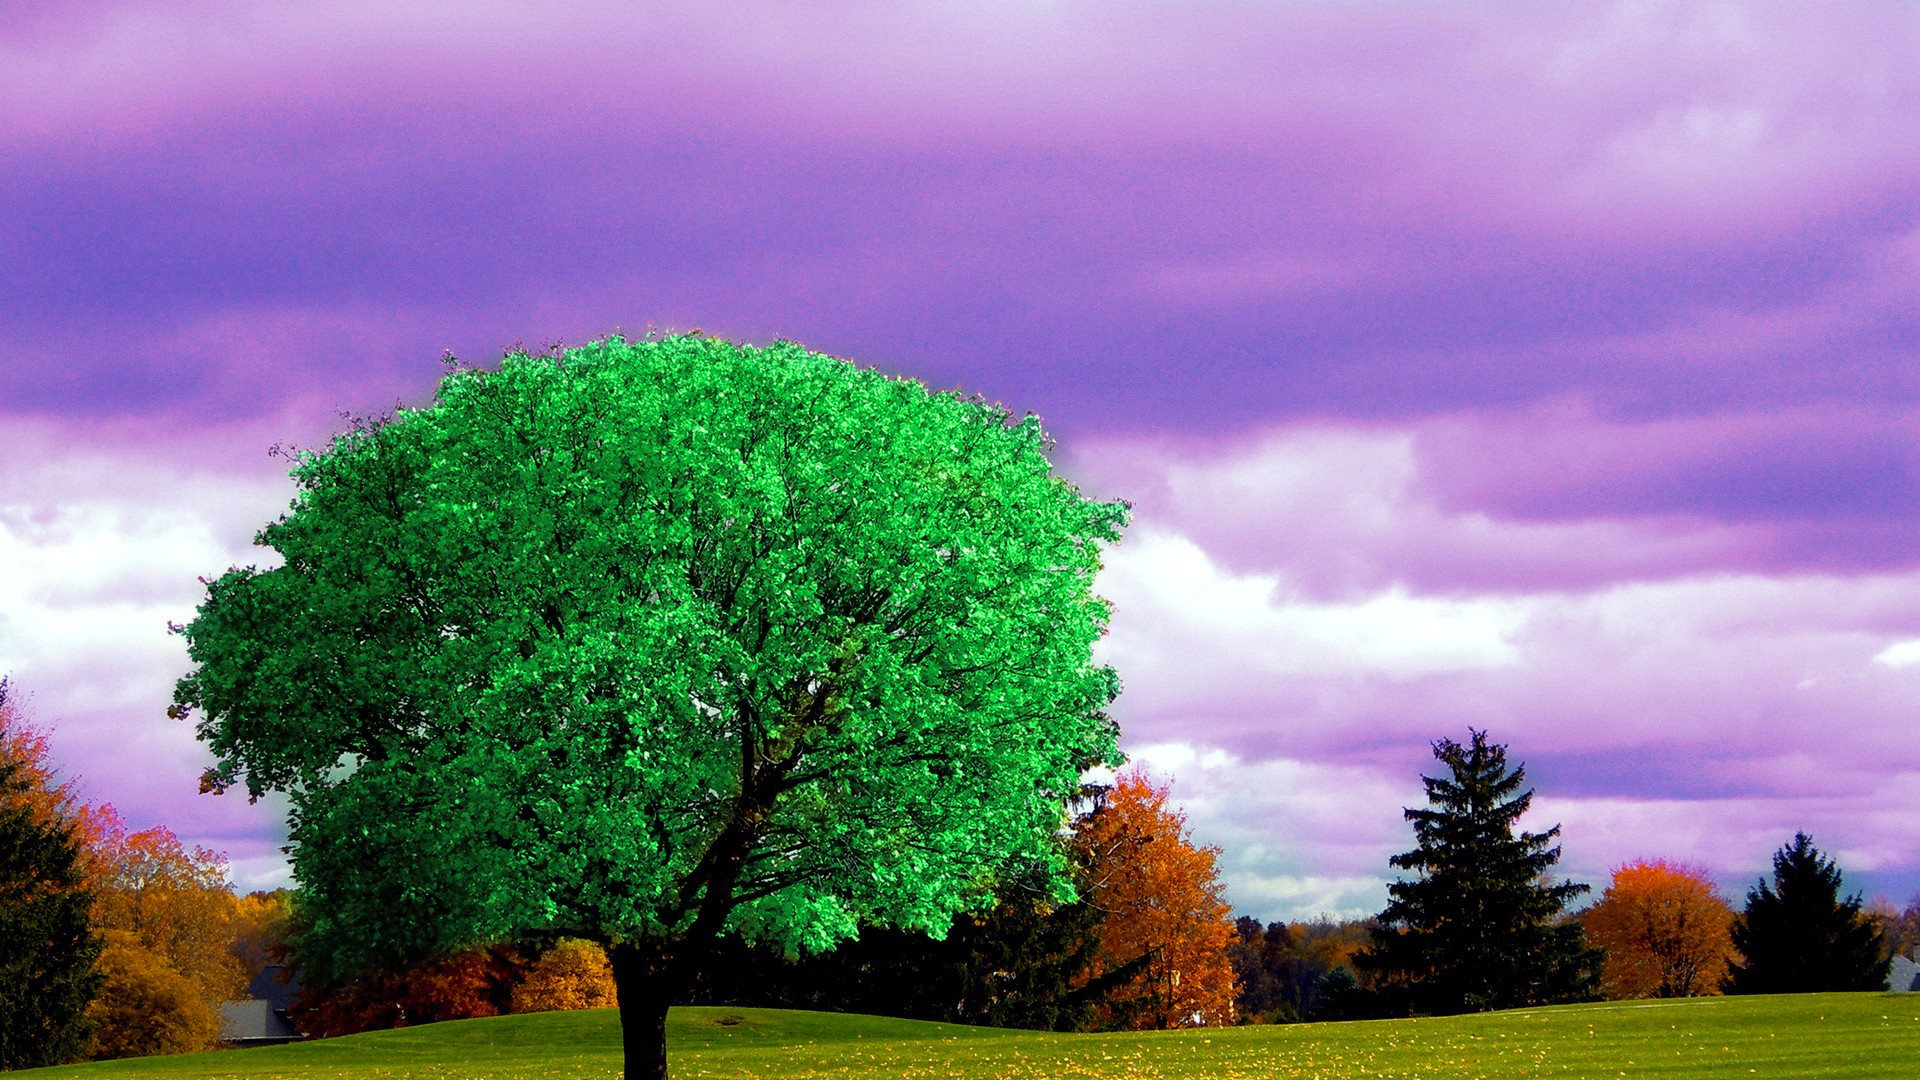 General 1920x1080 nature landscape HDR photo manipulation trees sky purple sky